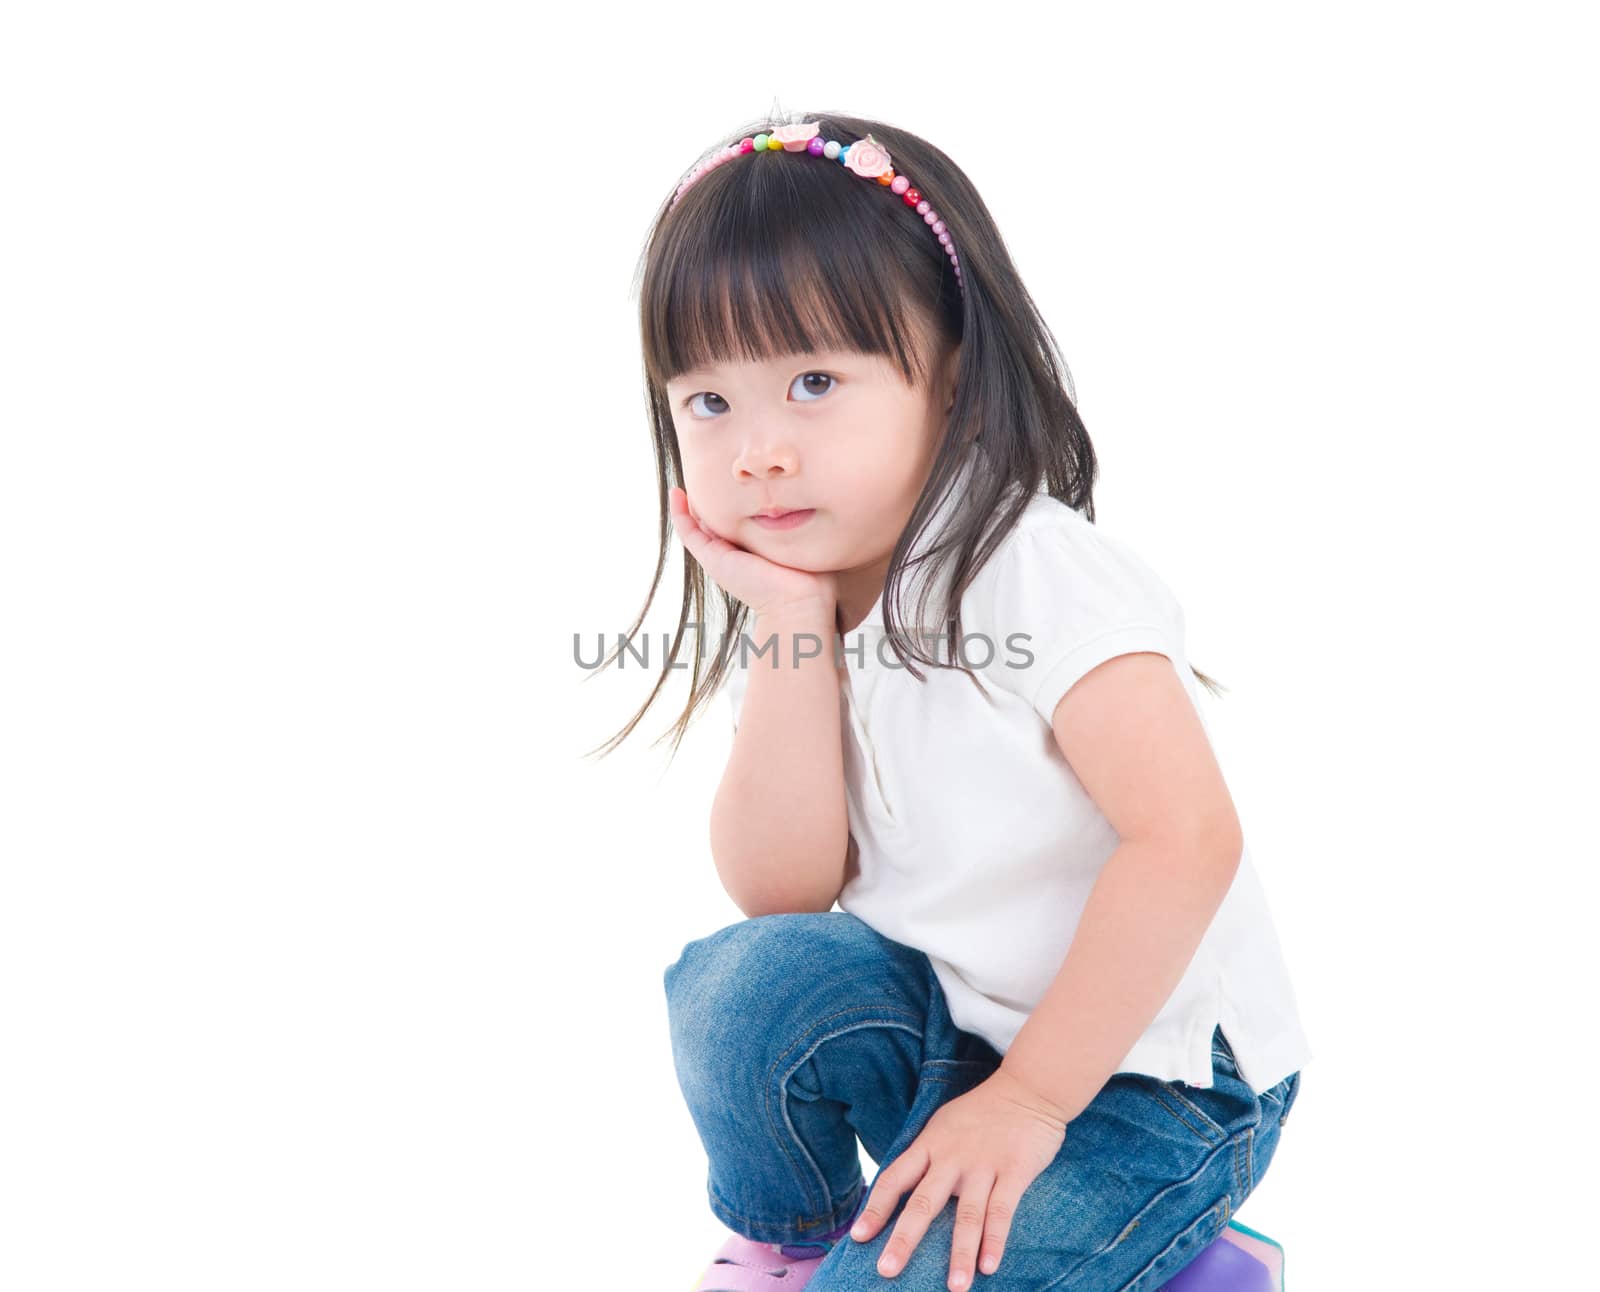 Little asian girl posing isolated on white background